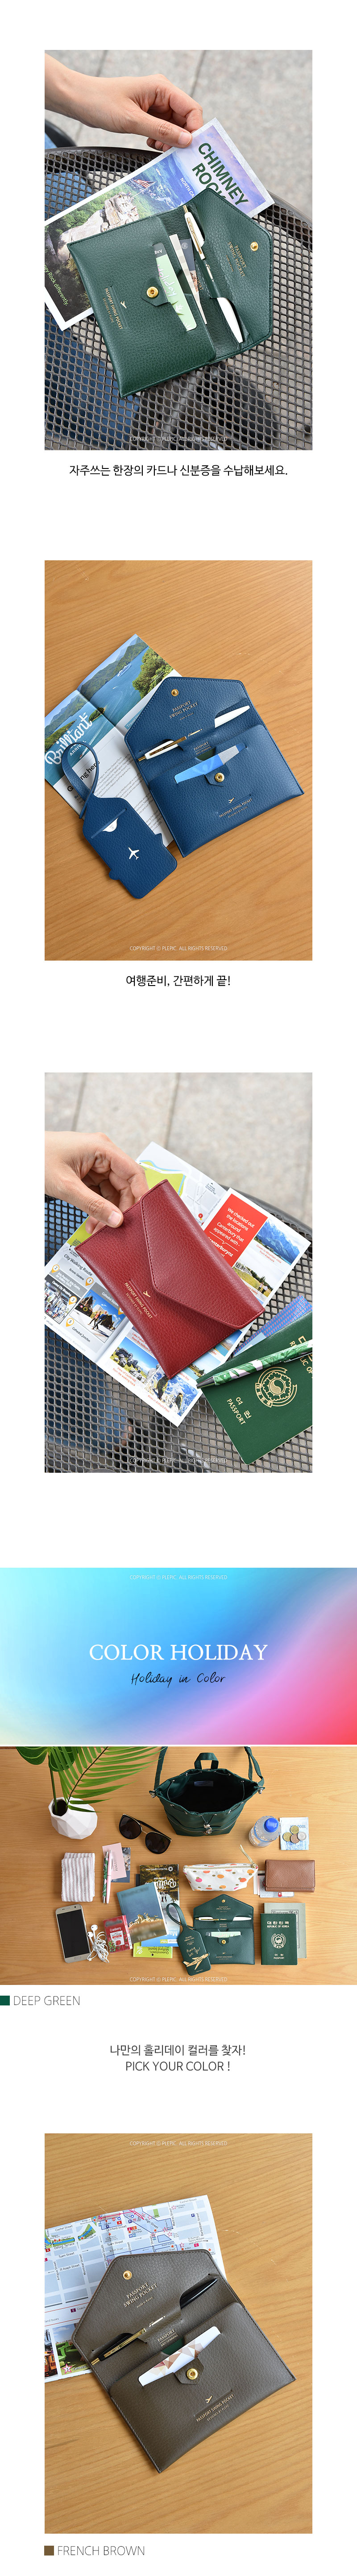 Passport Swing Pocket 11,900원 - 플레픽 여행/캠핑, 여권/네임택, 여권케이스, 파우치형 케이스 바보사랑 Passport Swing Pocket 11,900원 - 플레픽 여행/캠핑, 여권/네임택, 여권케이스, 파우치형 케이스 바보사랑